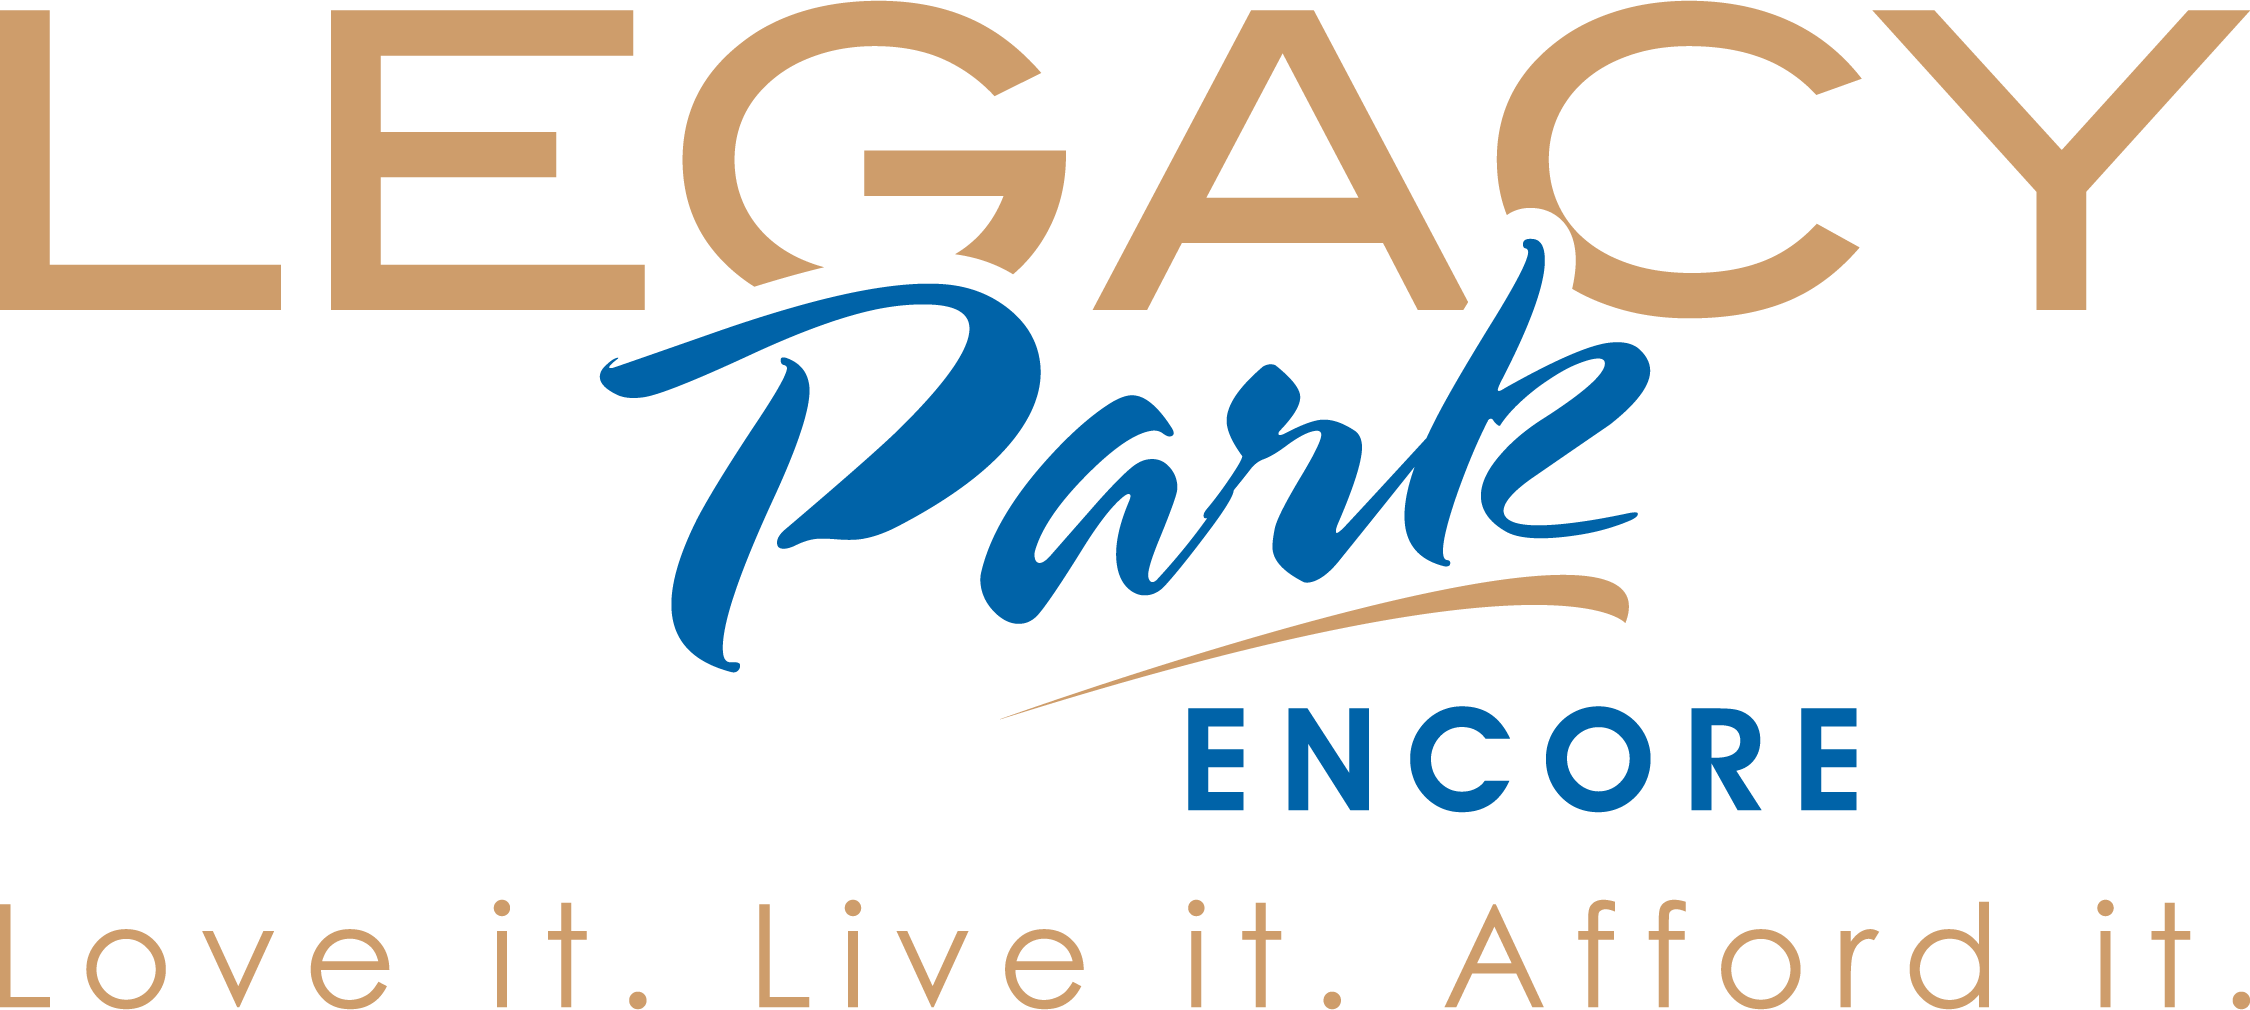 Legacy park encore logo